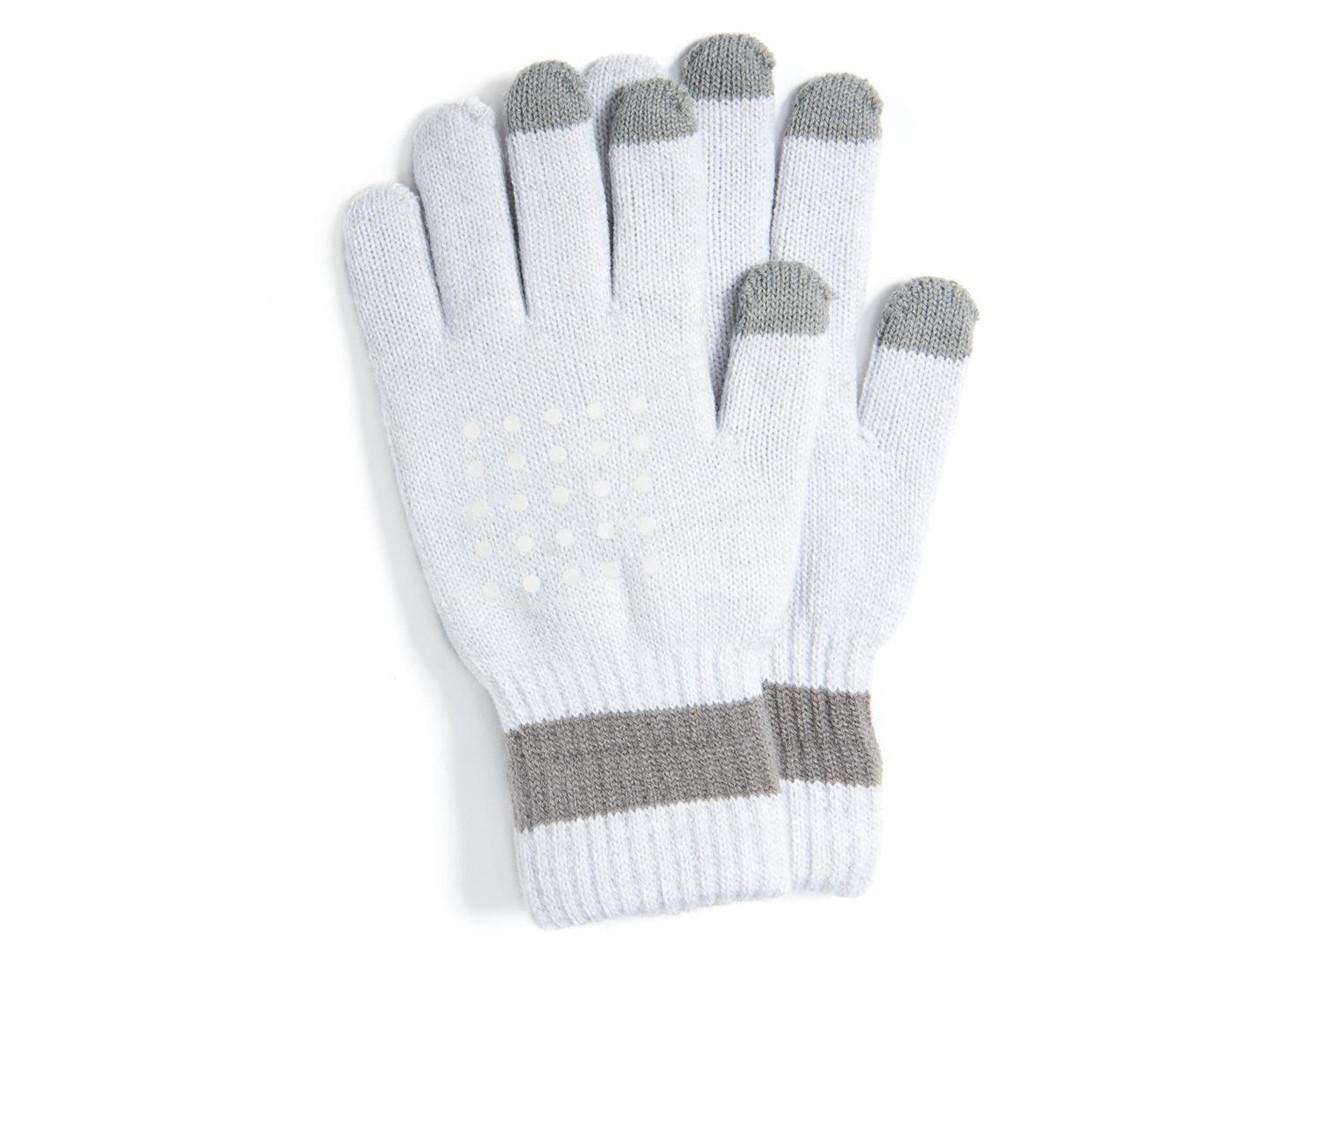 MUK LUKS 2 Layer Knit Glove